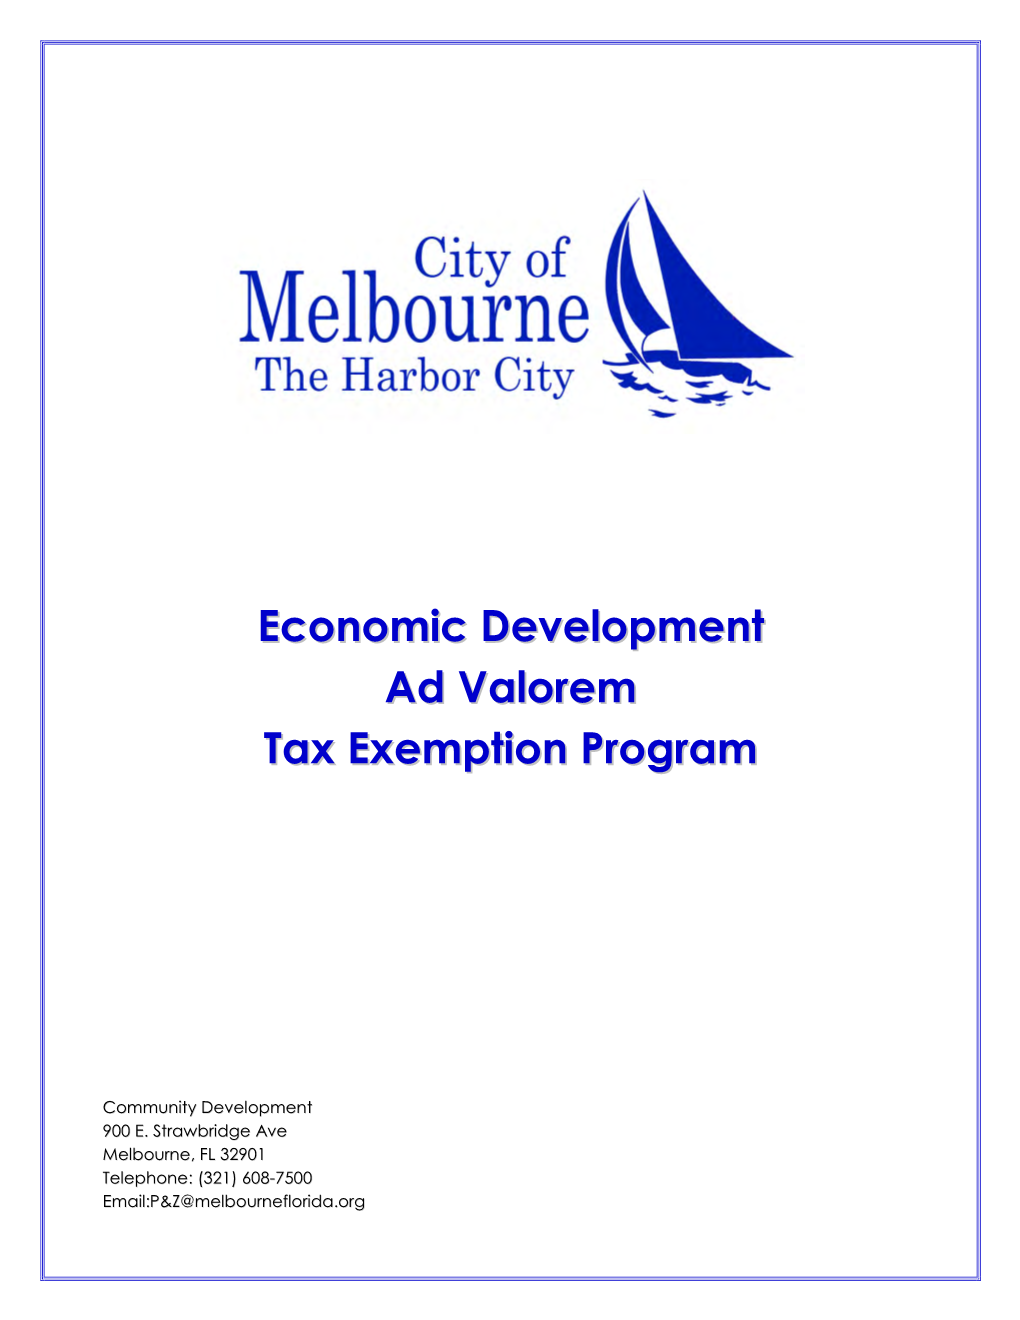 Economic Development Ad Valorem Tax Exemption Program